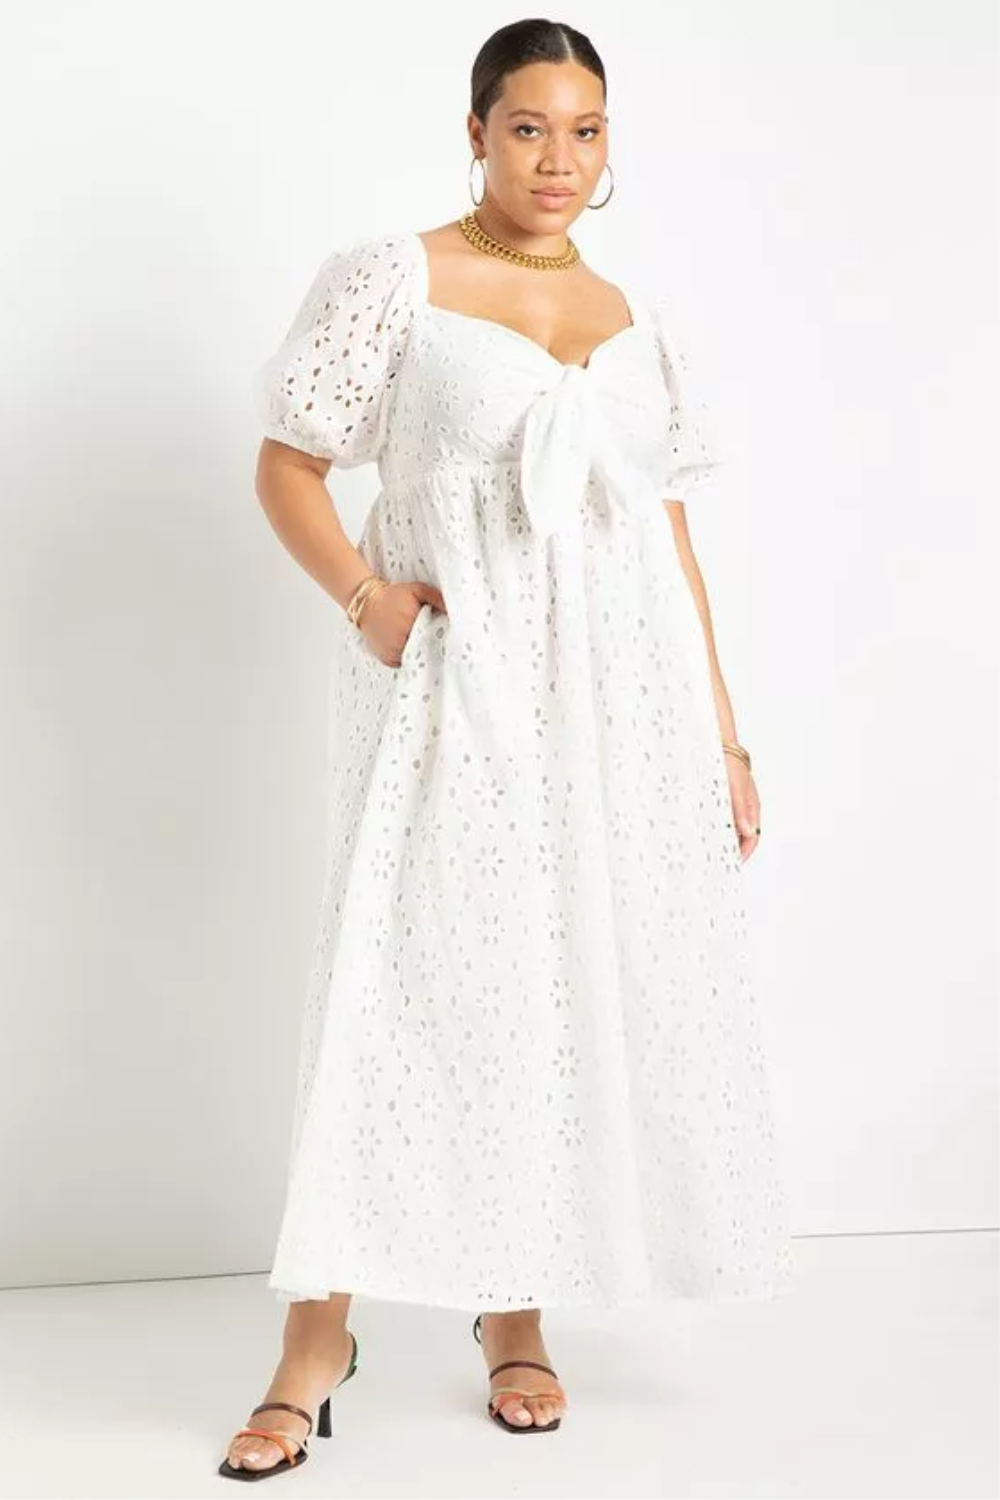 9 Plus Size Bride Approved White Bridal Shower Dress Ideas